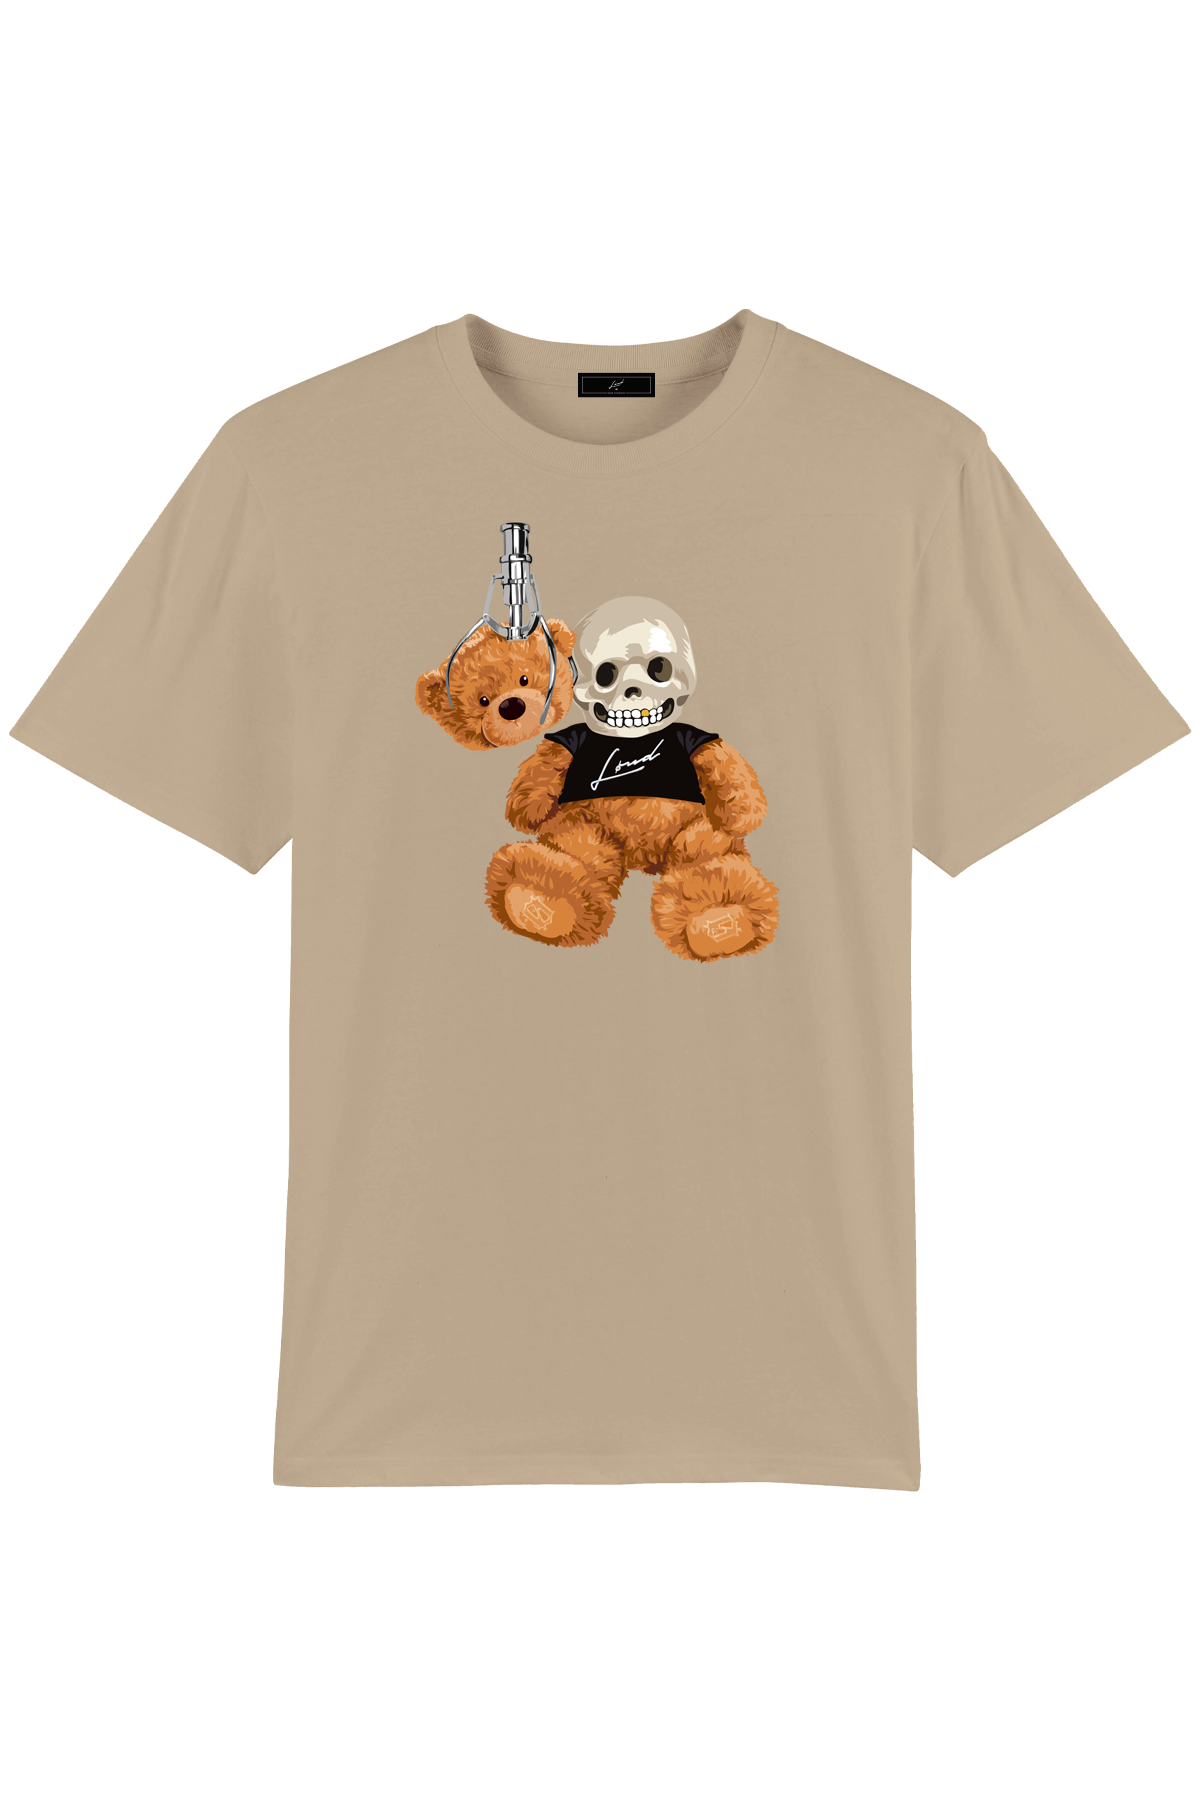 Bear Print Beige T-Shirt - Live Look Loud